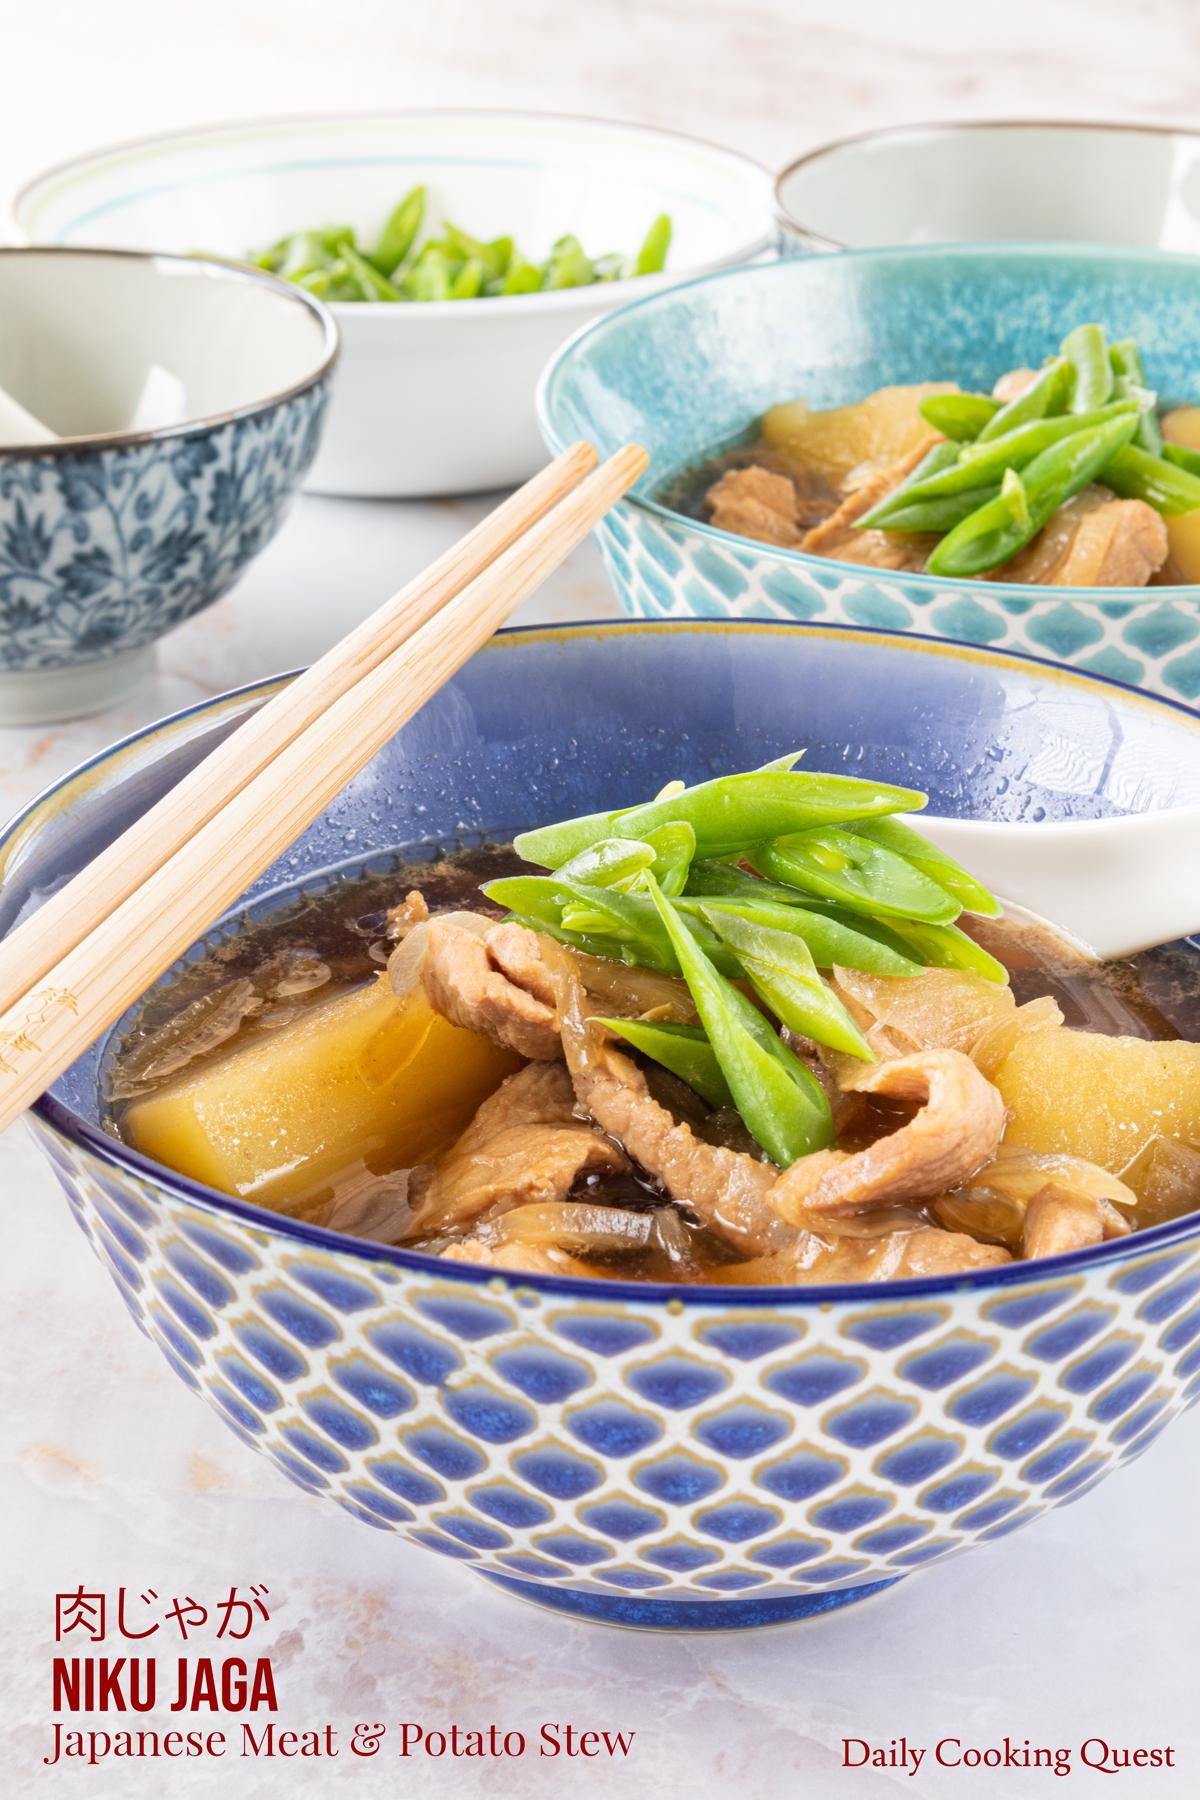 Niku Jaga - Japanese Meat and Potato Stew.